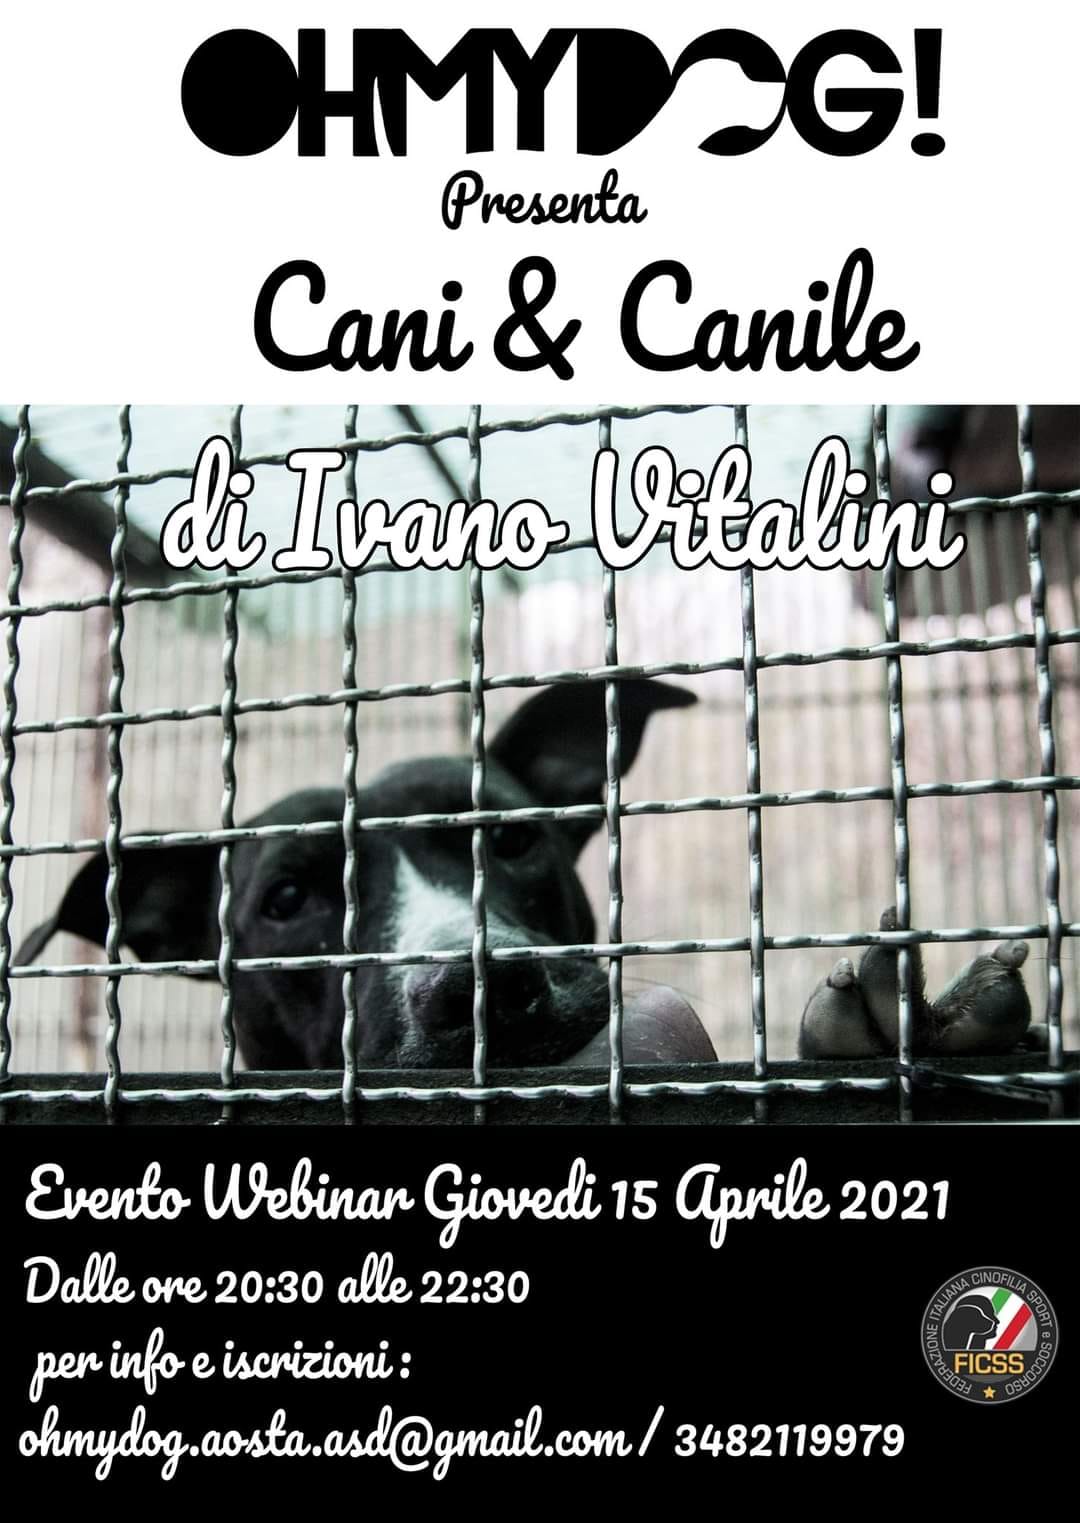 Webinar 15 Aprile 2021 - Cani e Canile con Ivano Vitalini